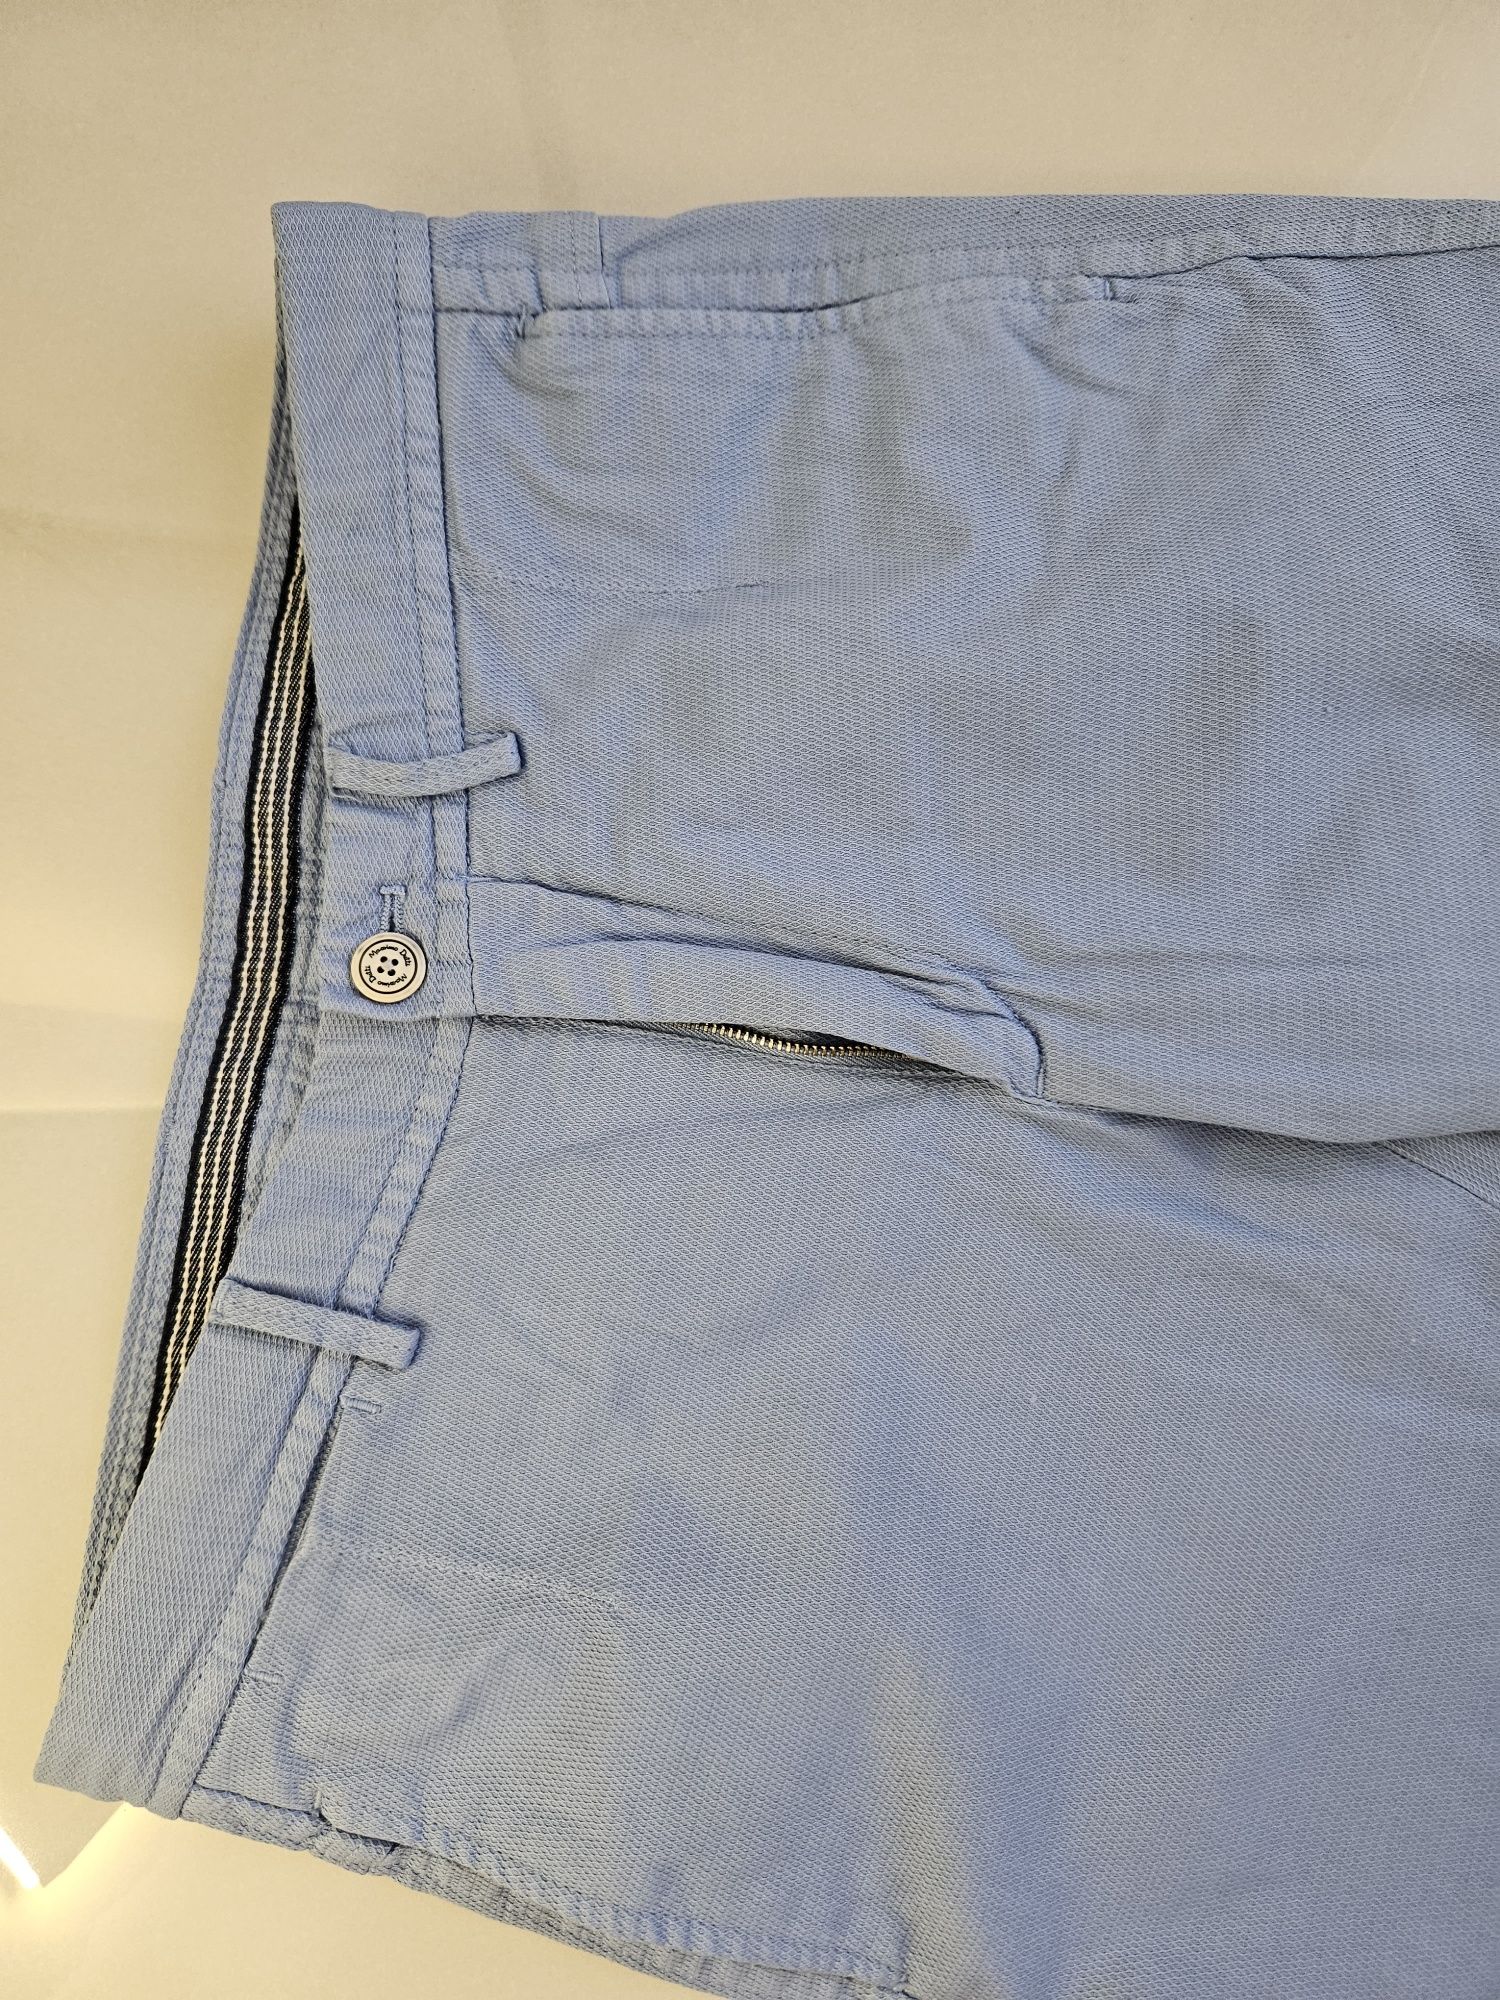 Брюки, штаны мужские голубого цвета Massimo Dutti 30р.